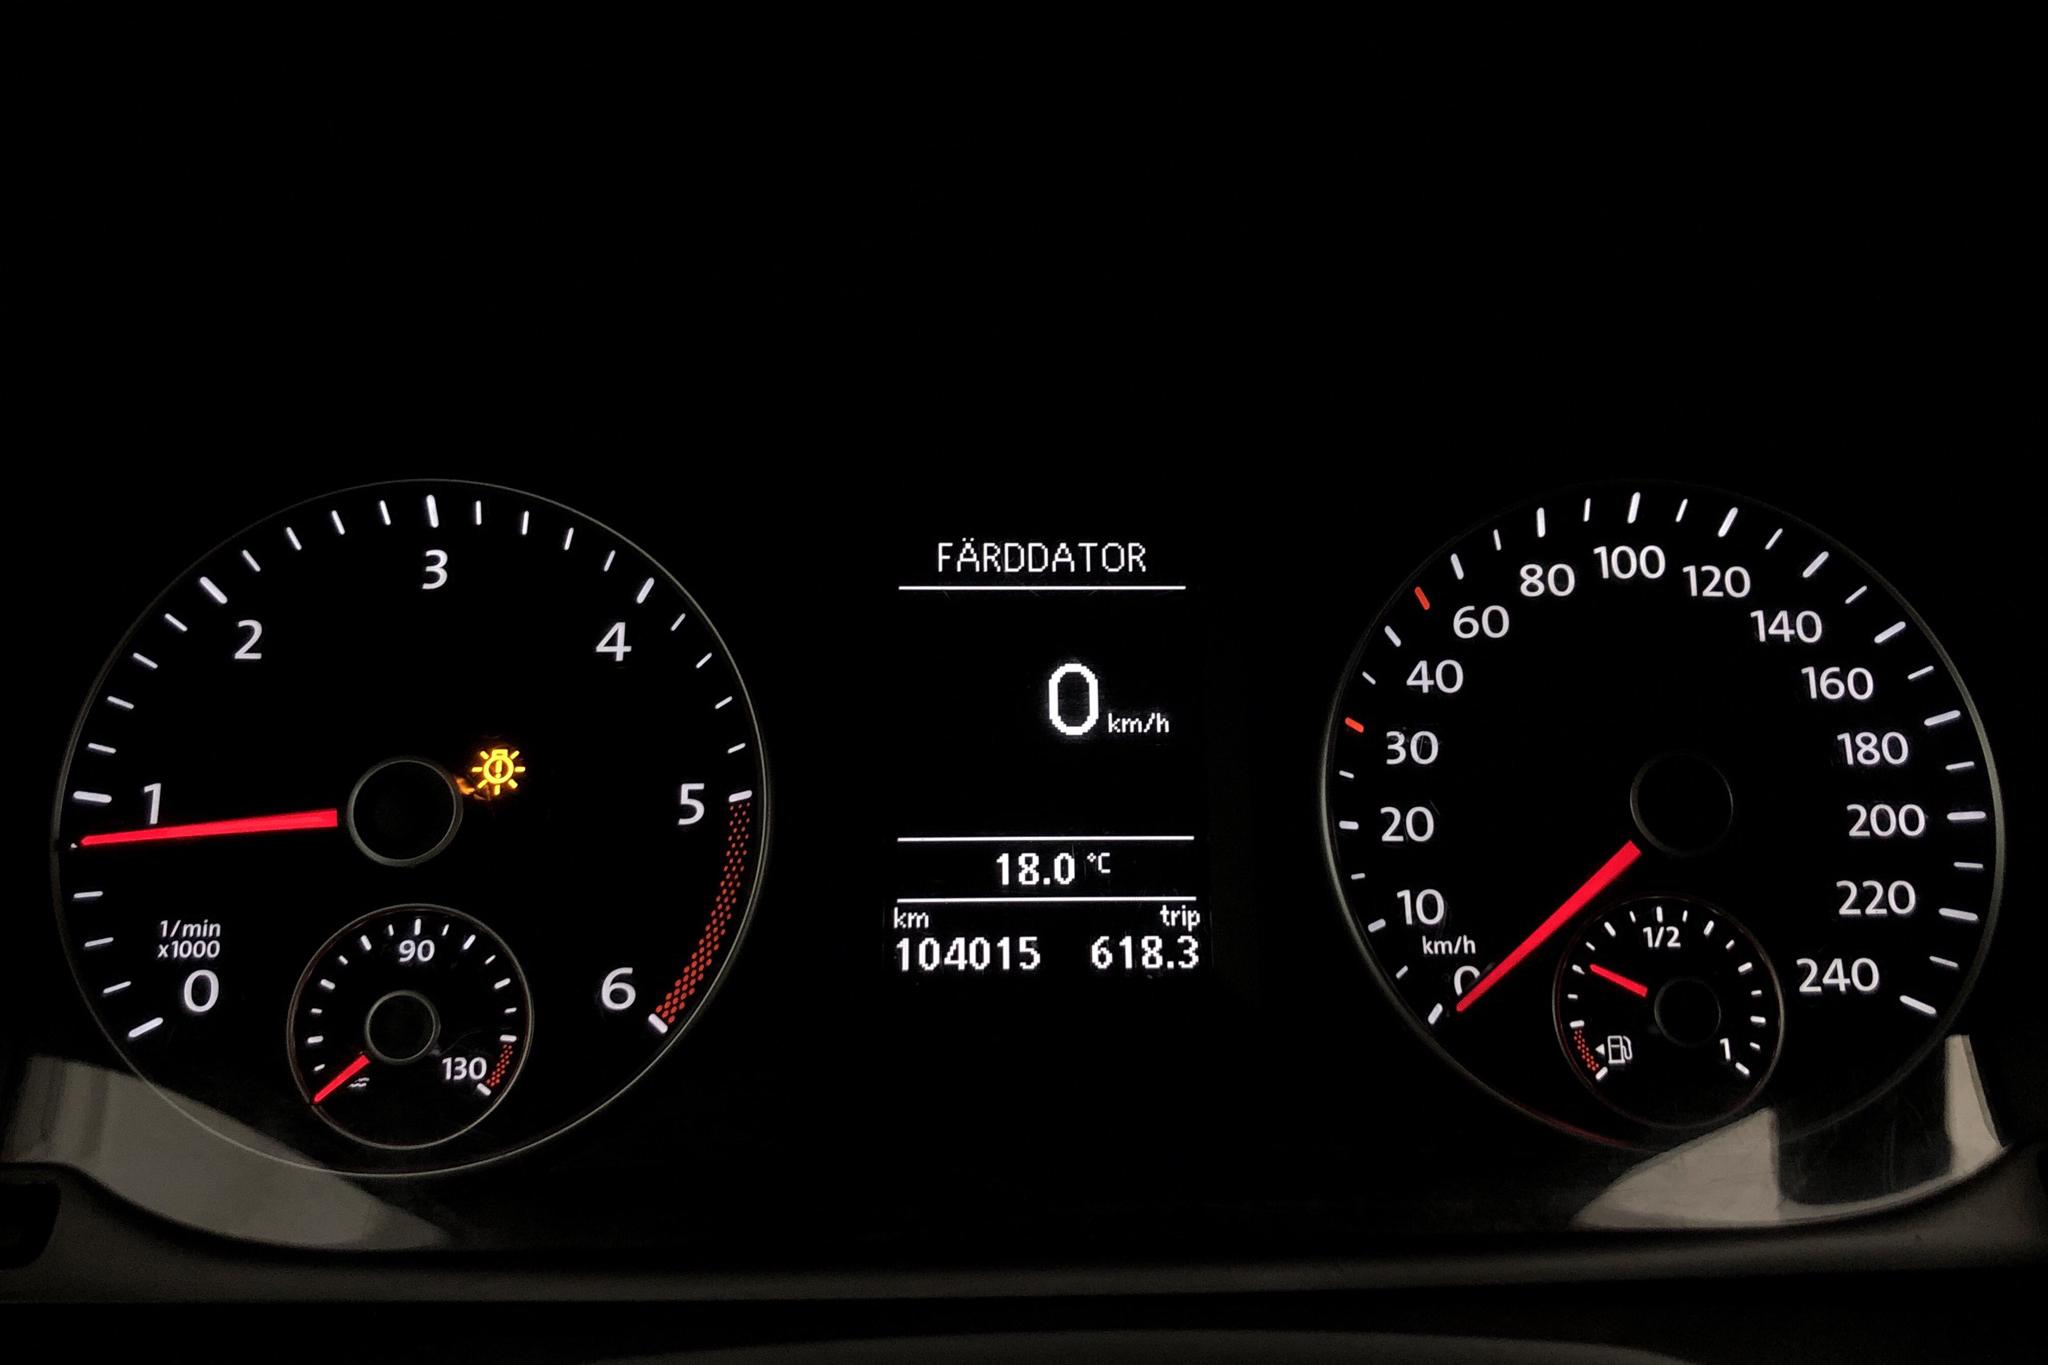 VW Caddy 2.0 TDI Skåp (102hk) - 104 010 km - Automatic - white - 2018